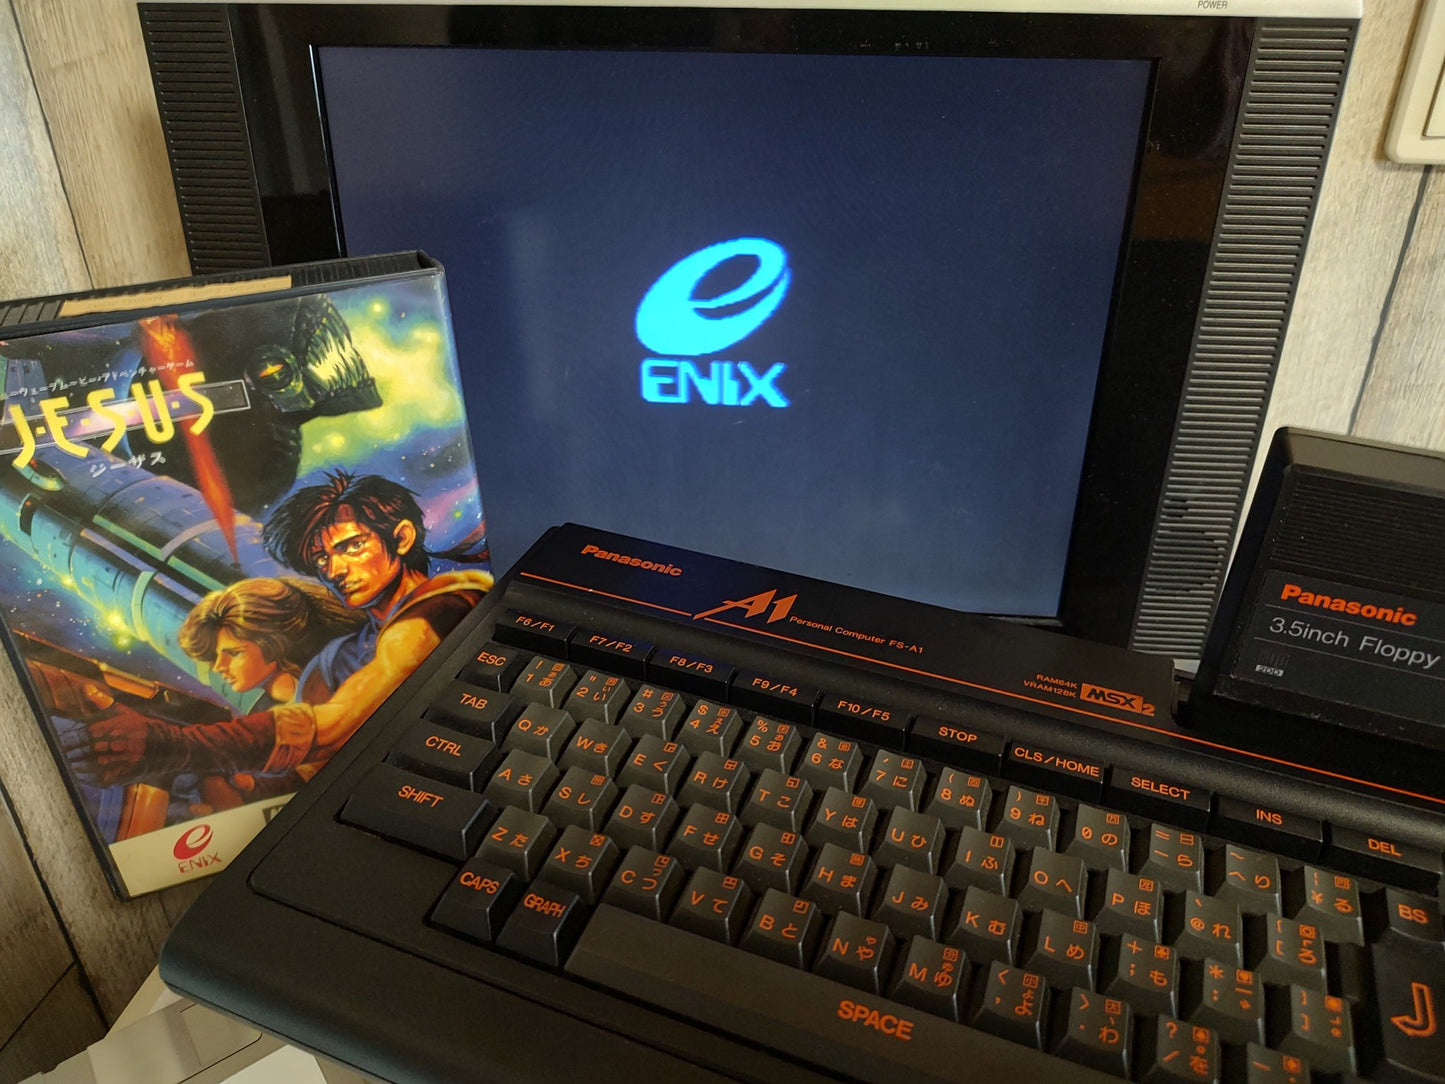 JESUS ENIX MSX/MSX PC game, Game disk, Manual, Box set, Working-f0516-